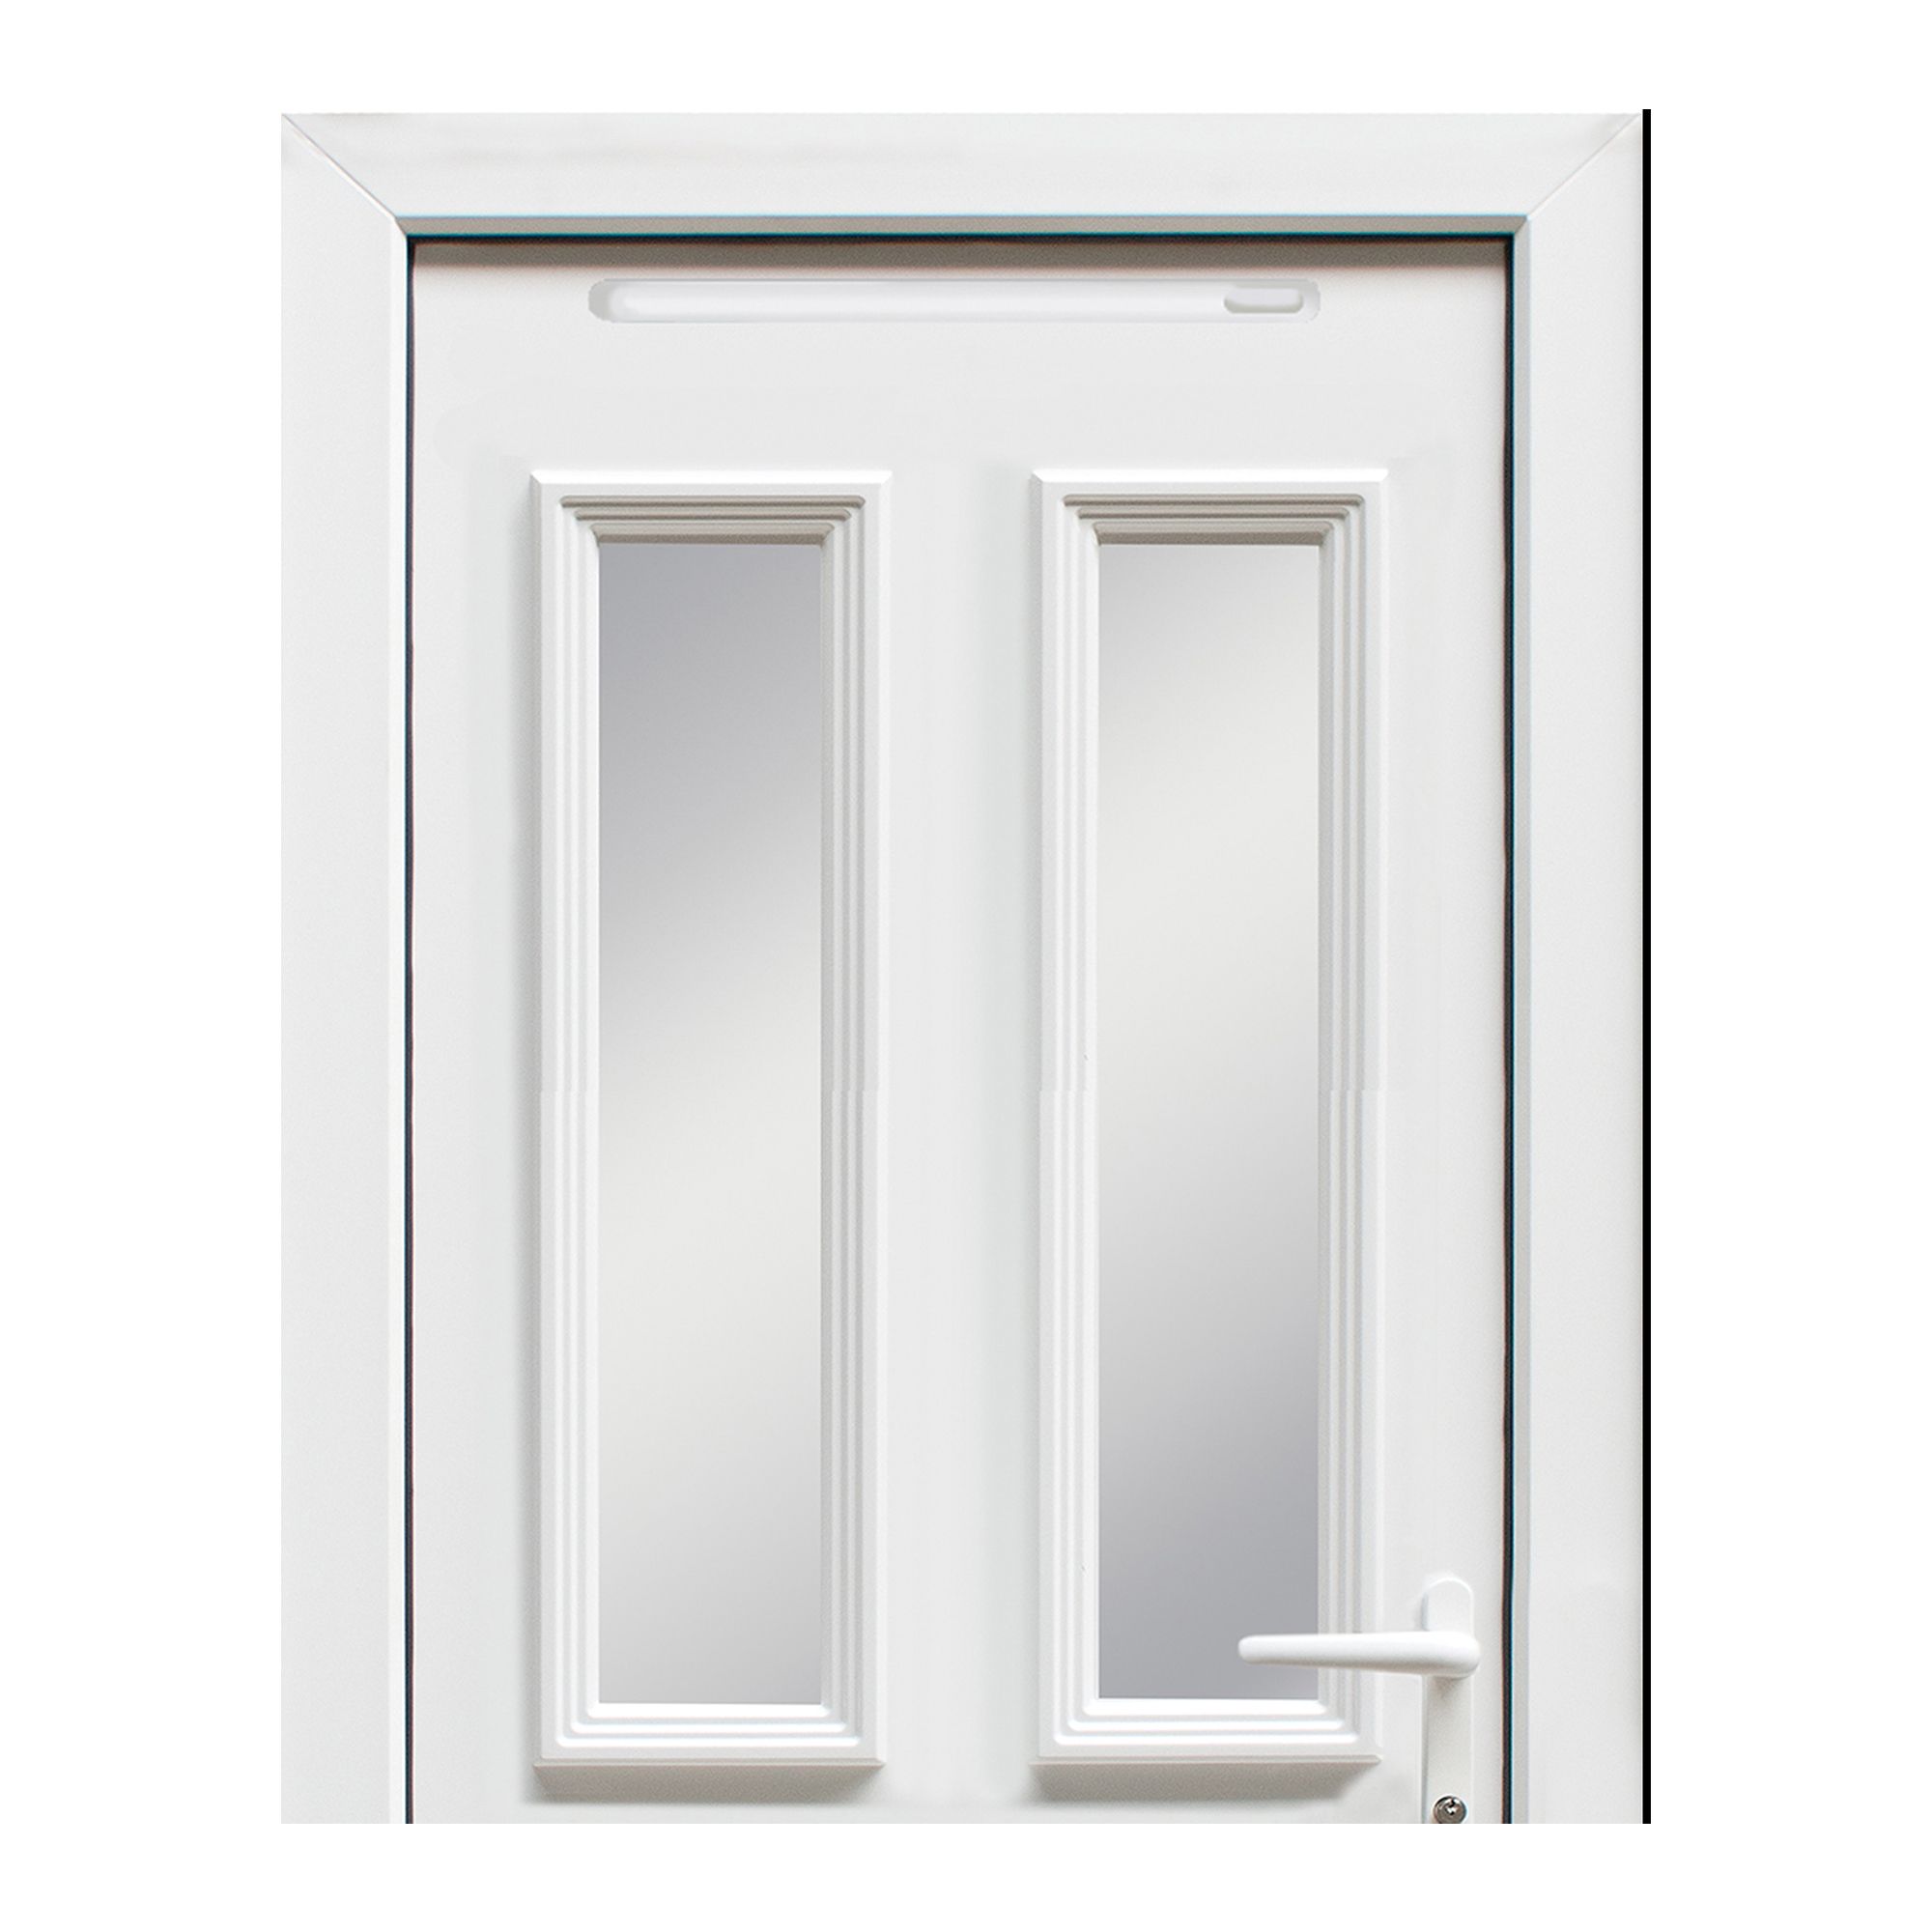 4 panel Diamond bevel Frosted Glazed White Left-hand External Front Door set, (H)2055mm (W)840mm